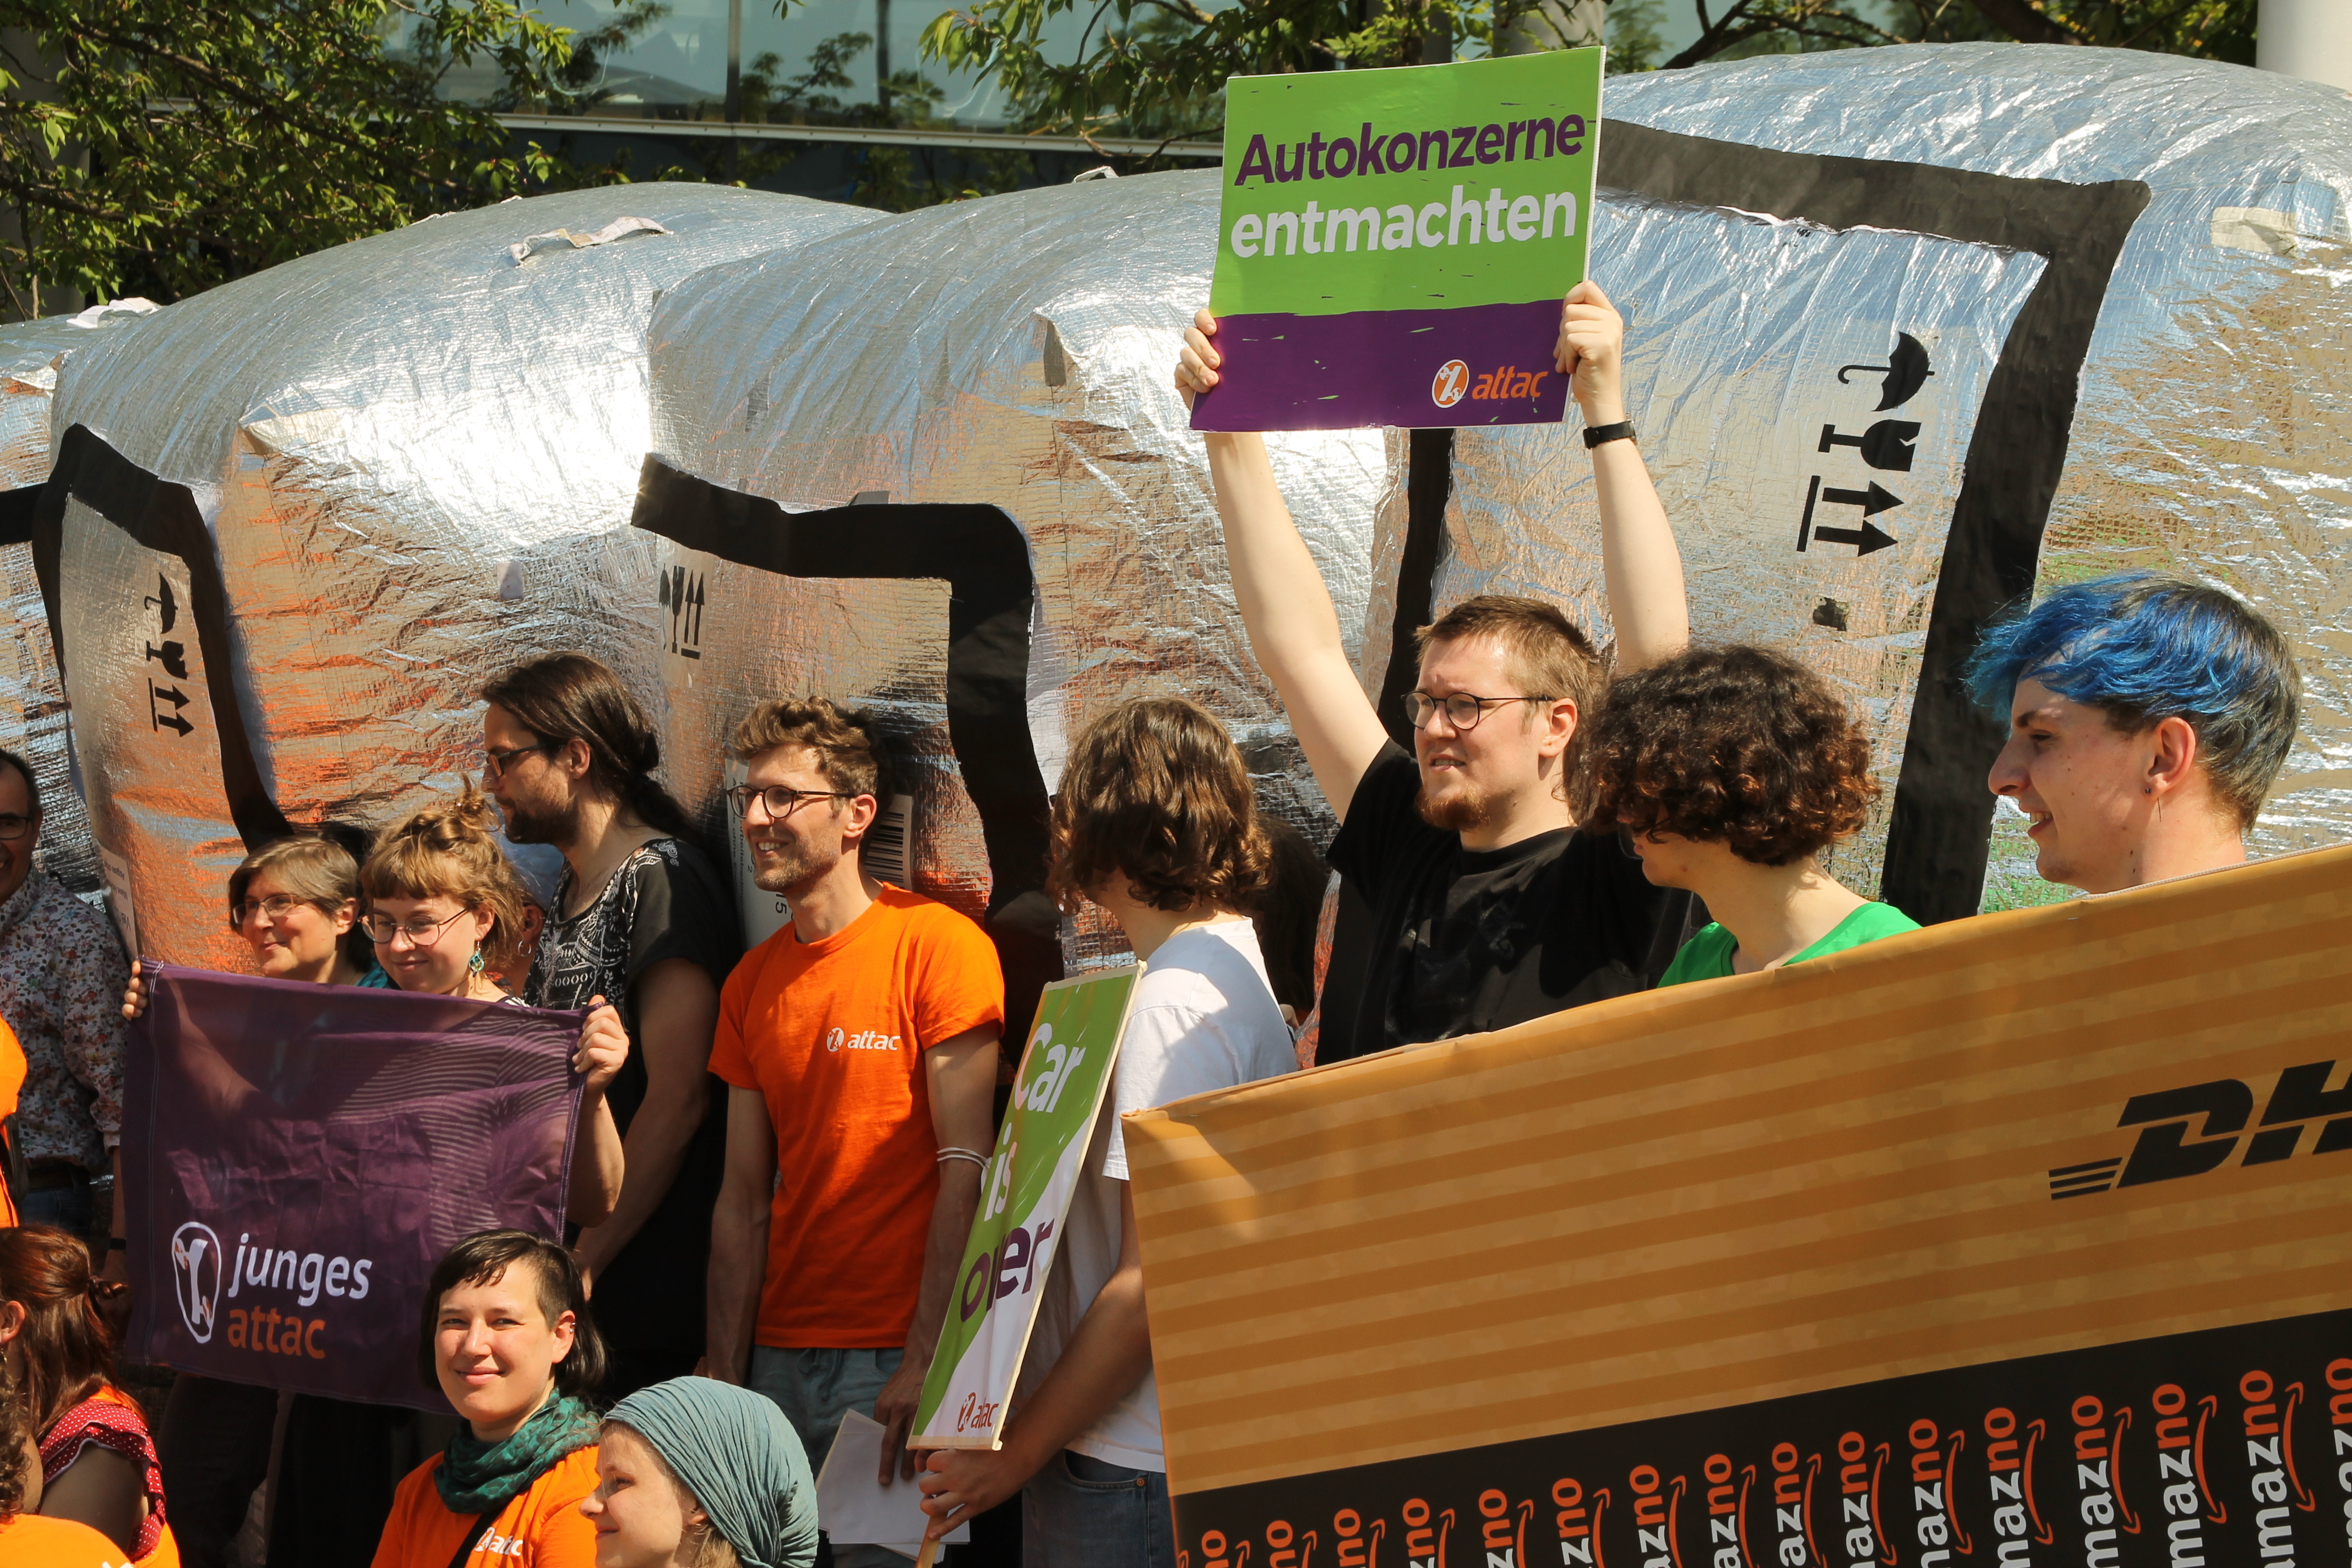   Versand, Transport, Protest | Weltverkehrsforum tagt in Leipzig  